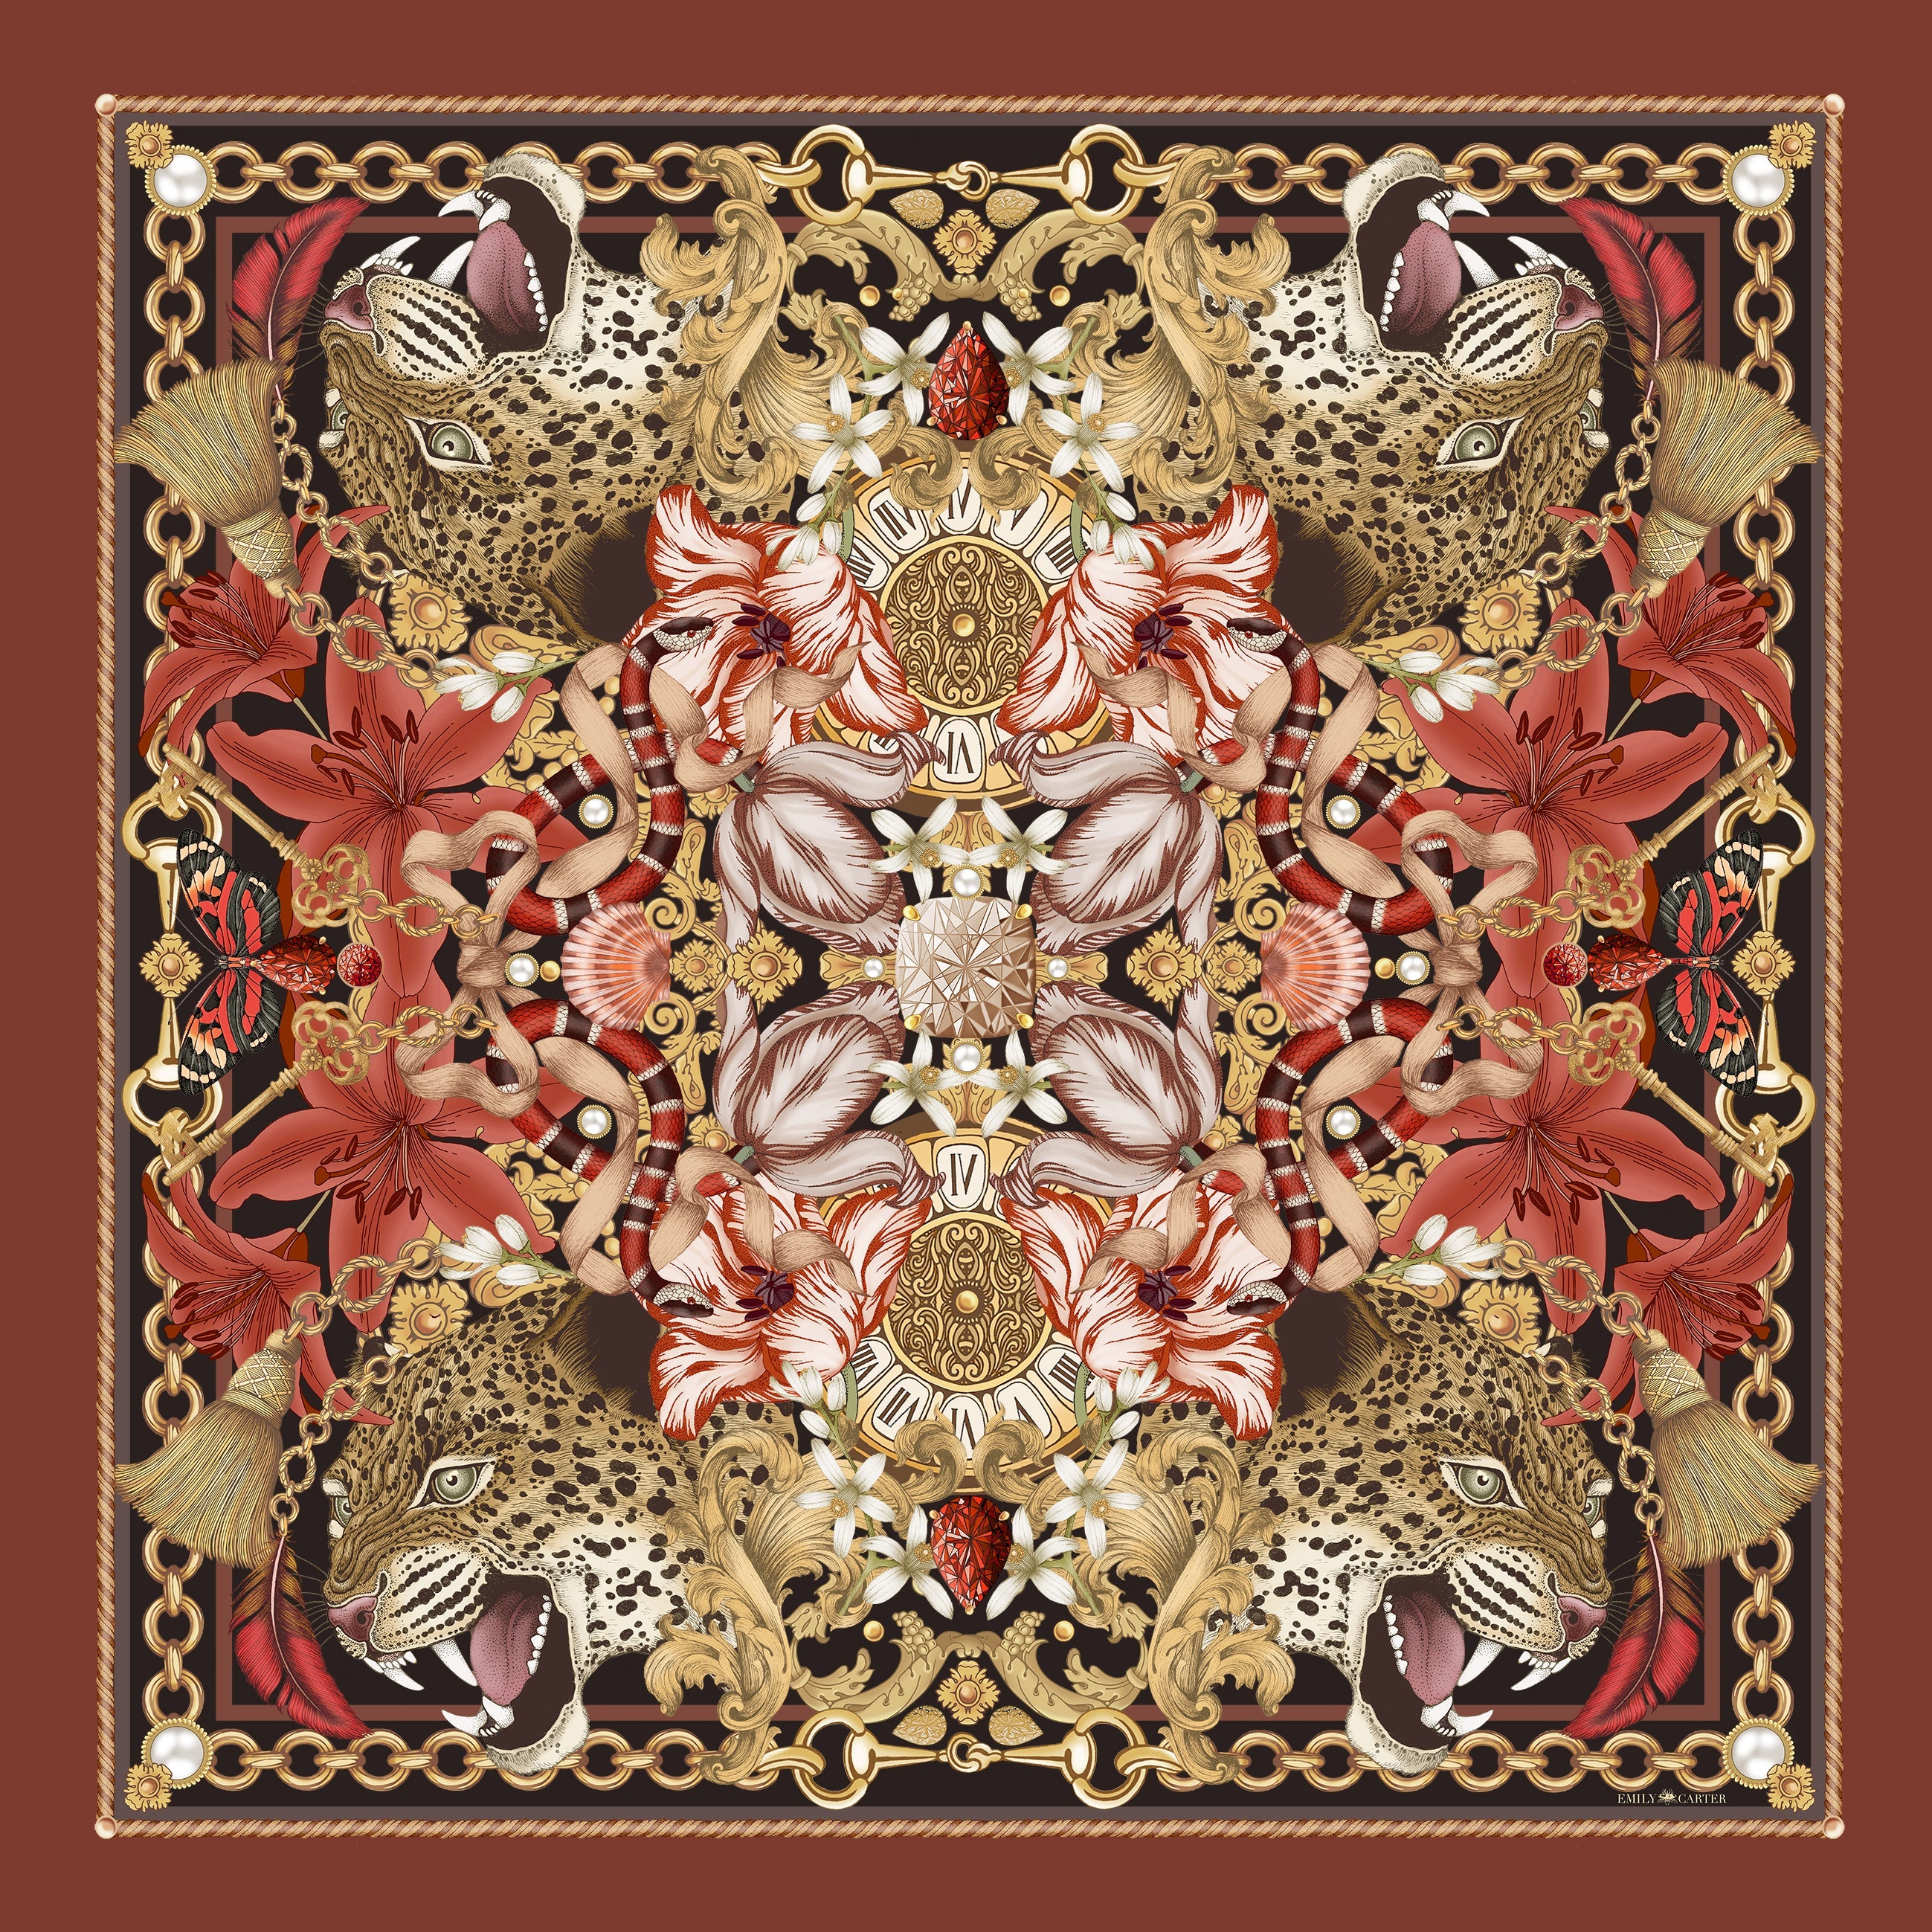 The Leopard & Tulip Scarf | Wool/Silk | 130x130cm [Preorder]